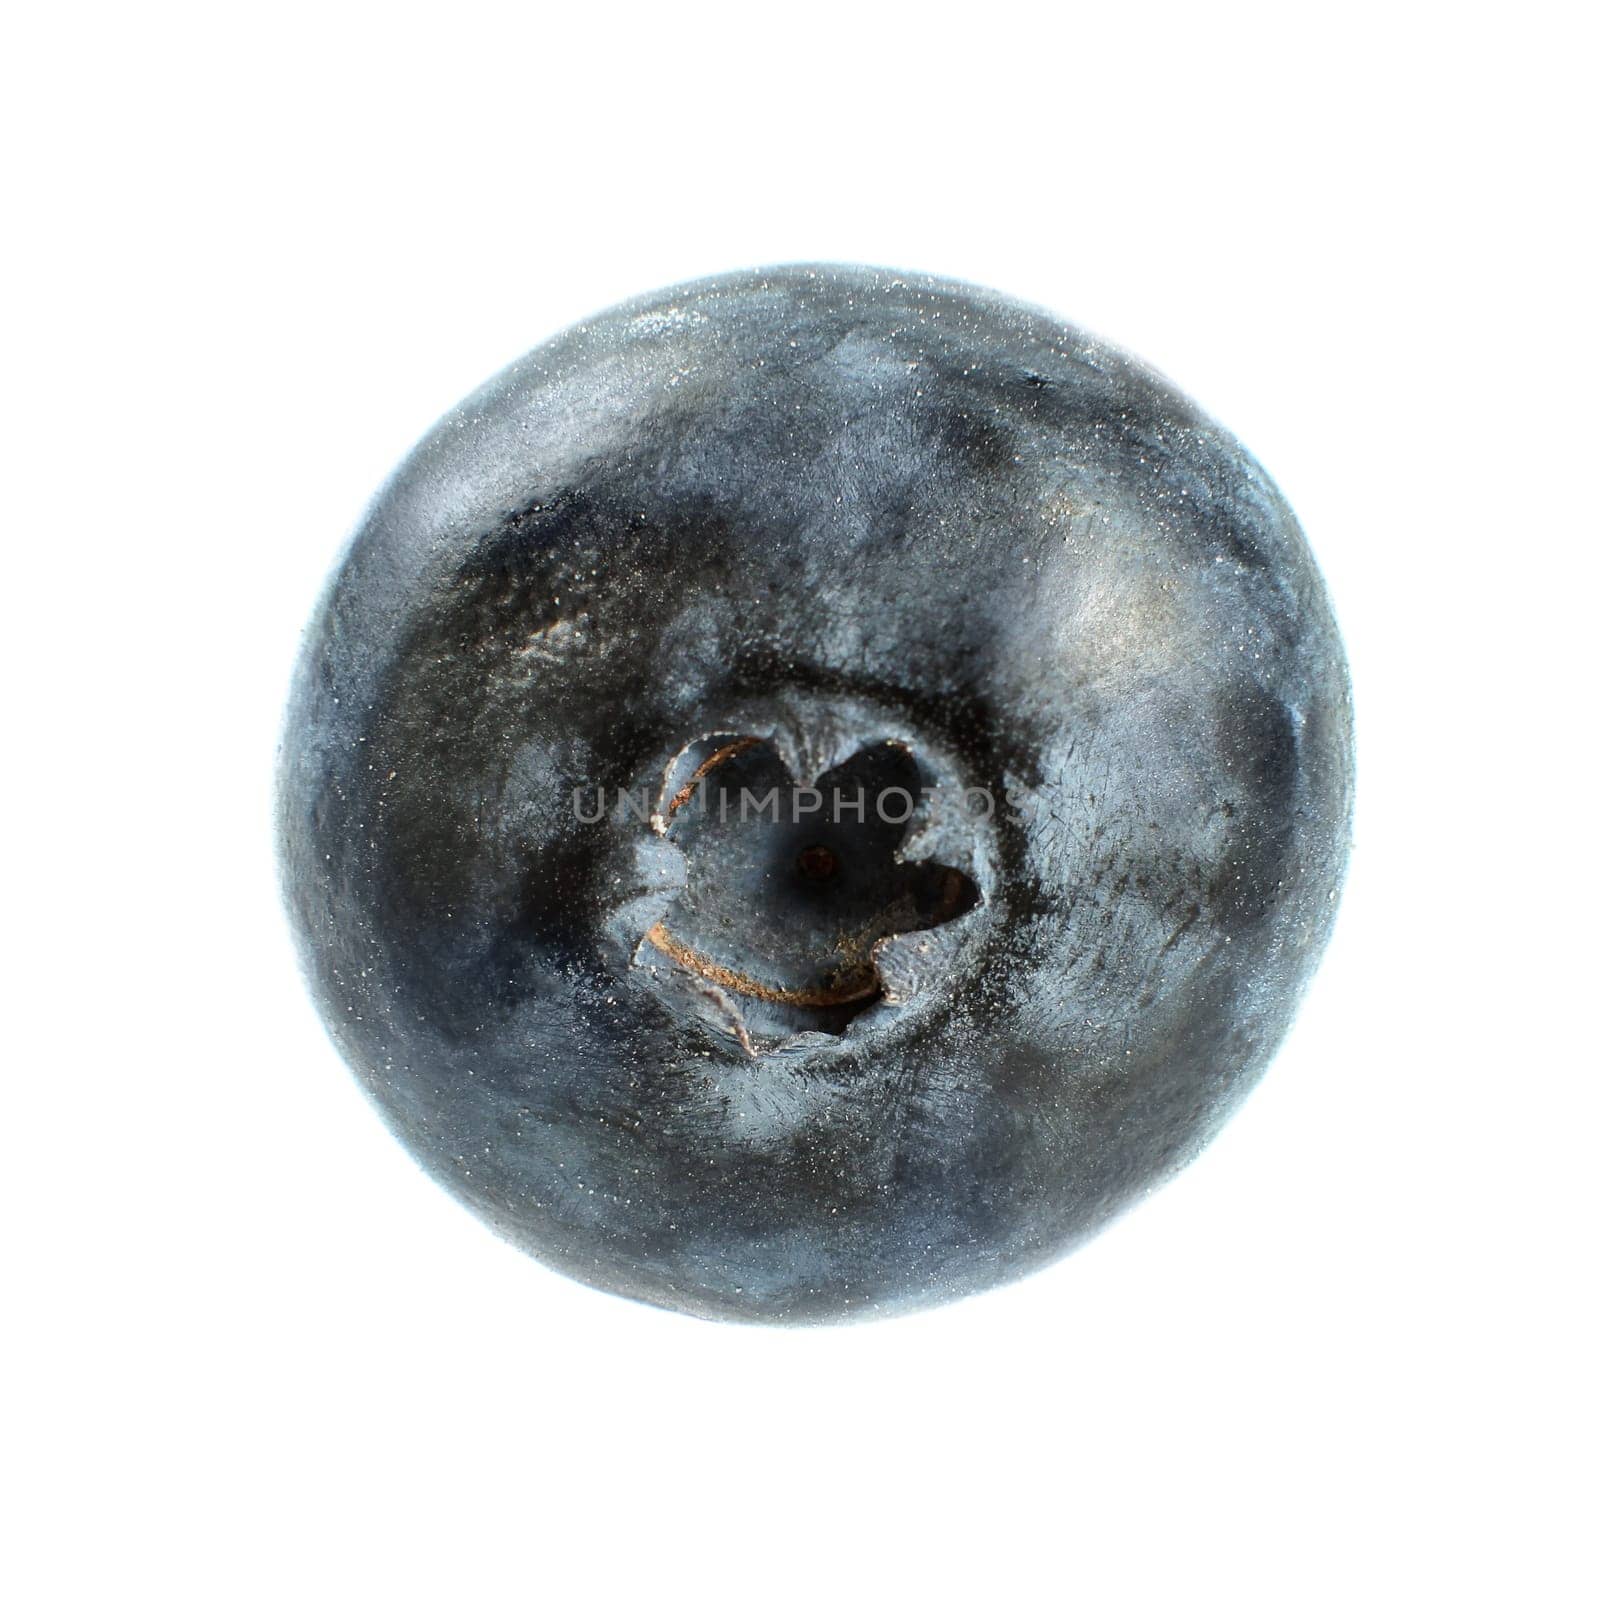 Single blueberry isolated on white background by Ivanko